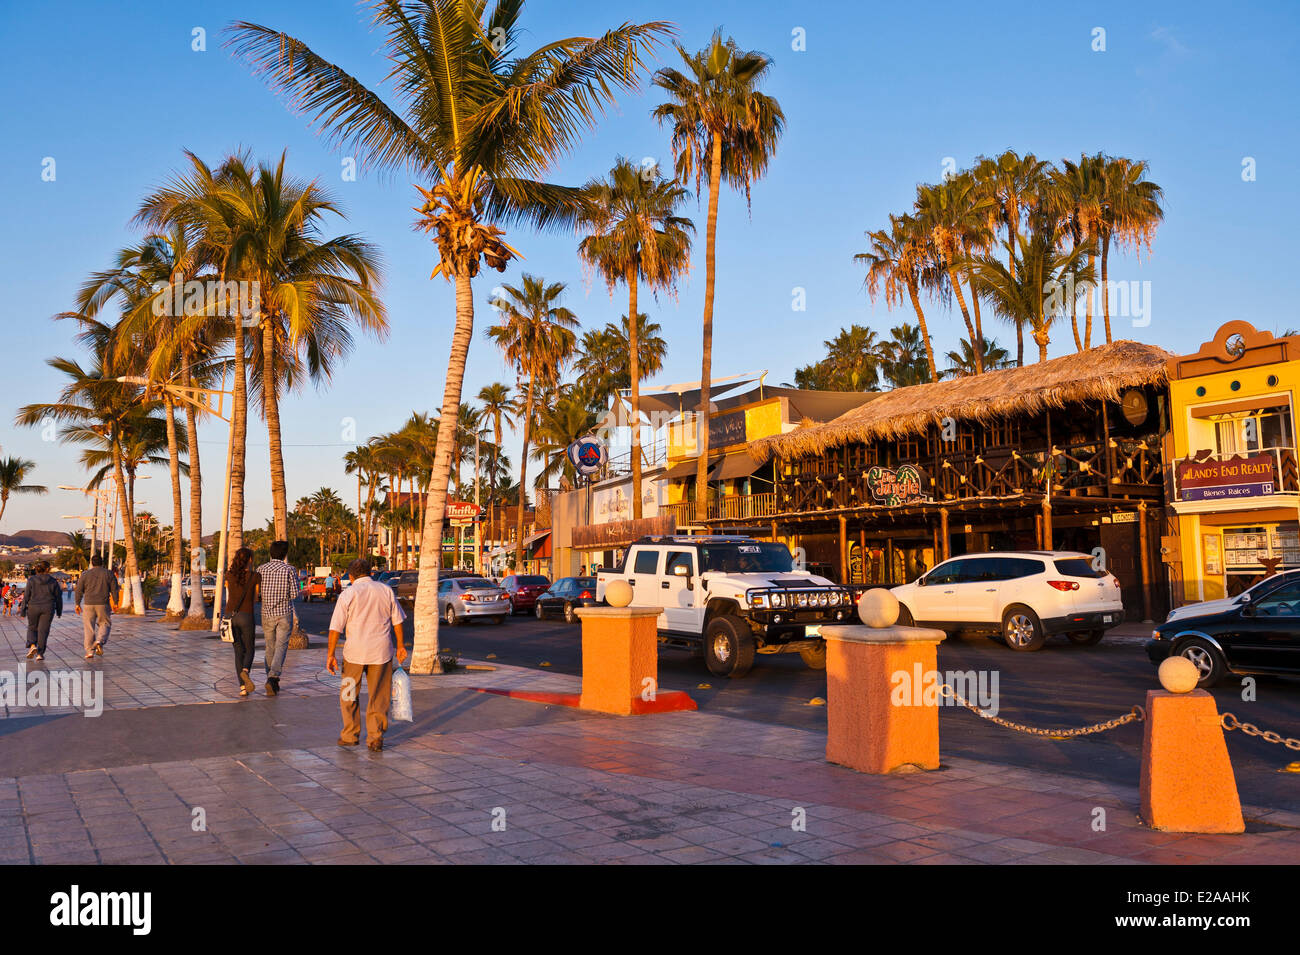 Mexico, Baja California Sur state, La Paz, the Malecon (waterfront street) Stock Photo